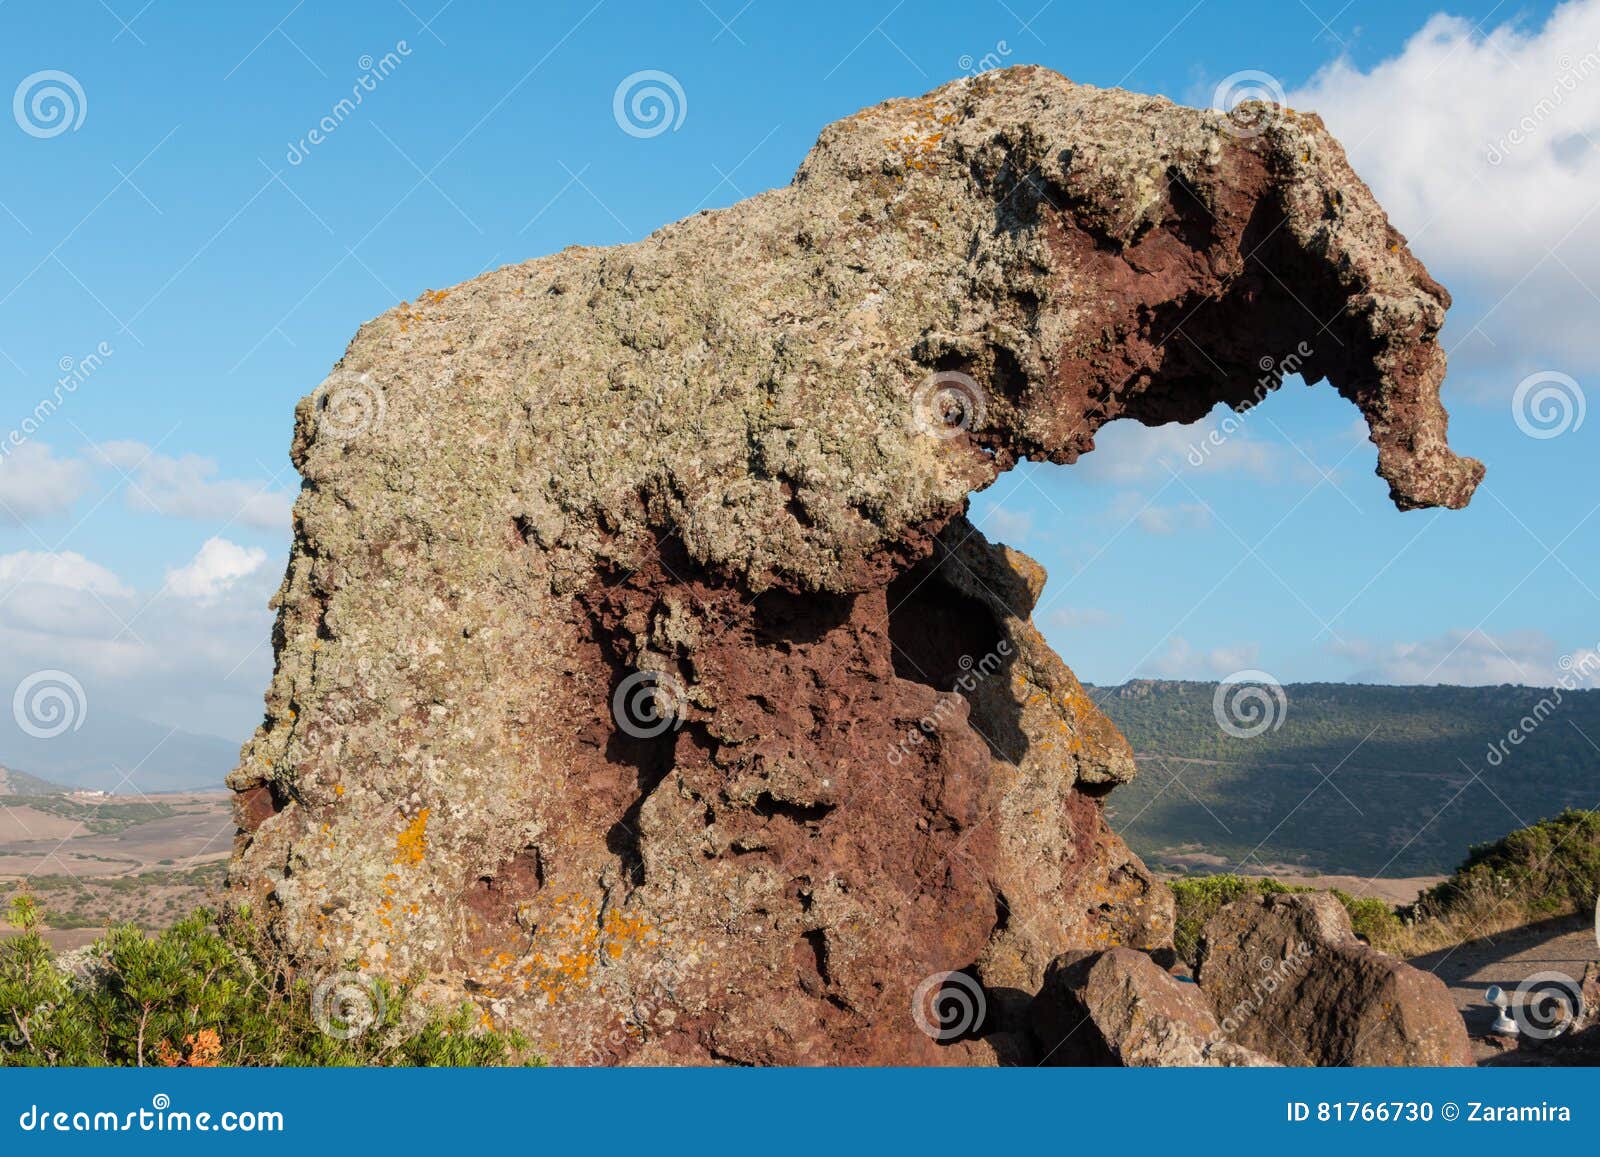 the elephant rock